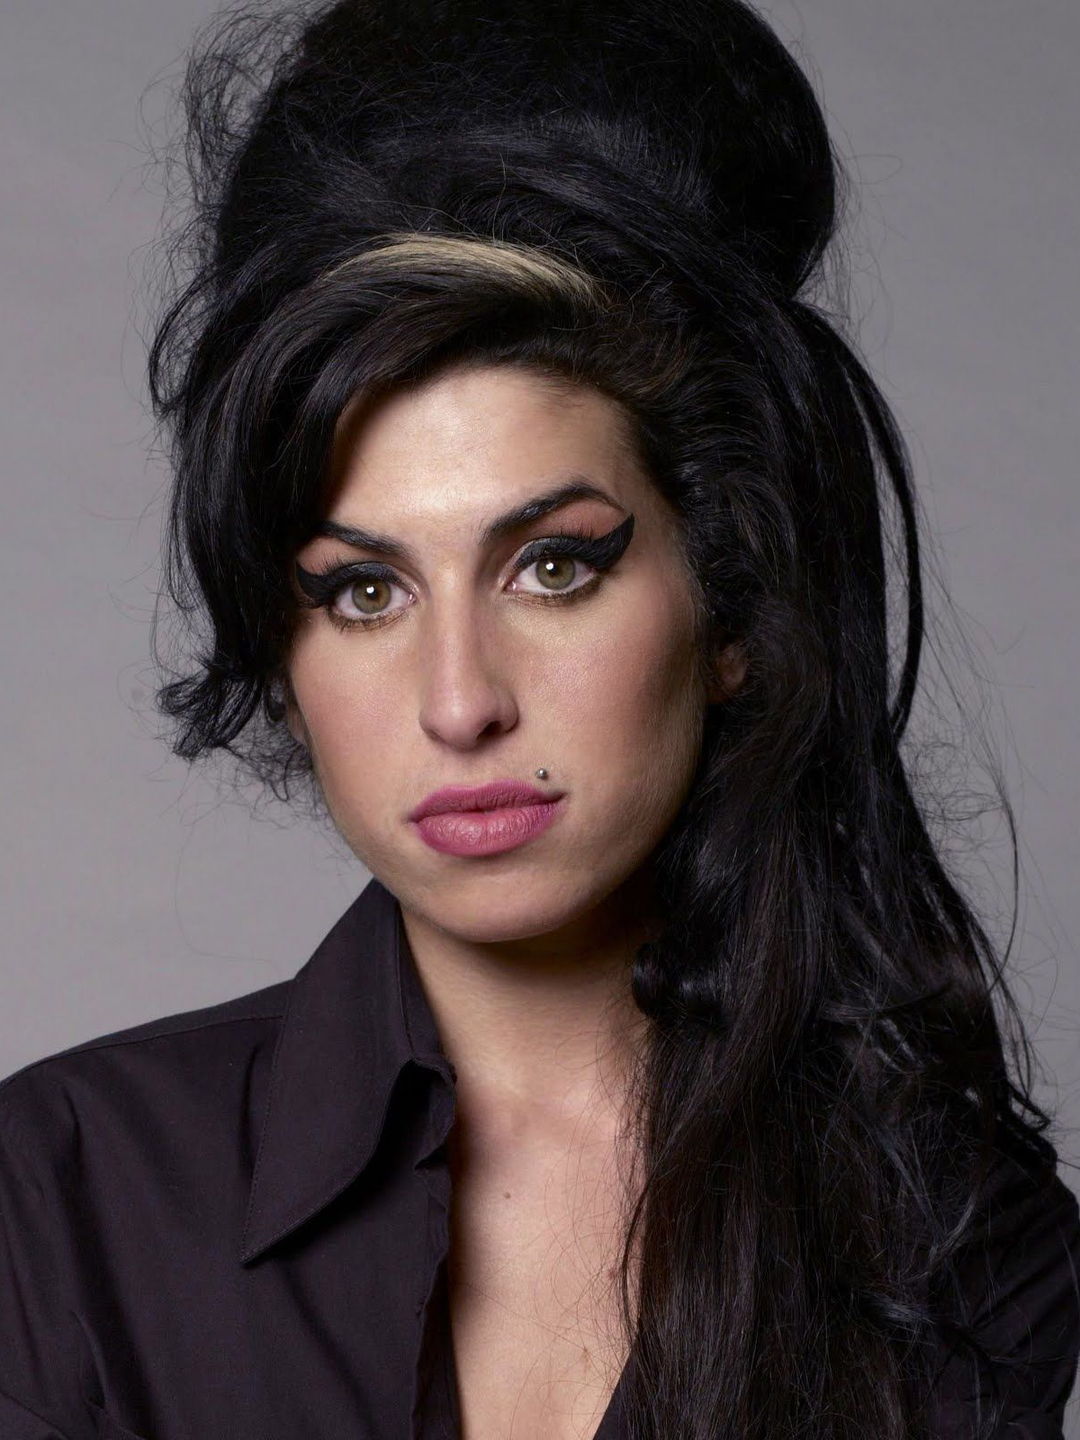 Amy Winehouse personal traits